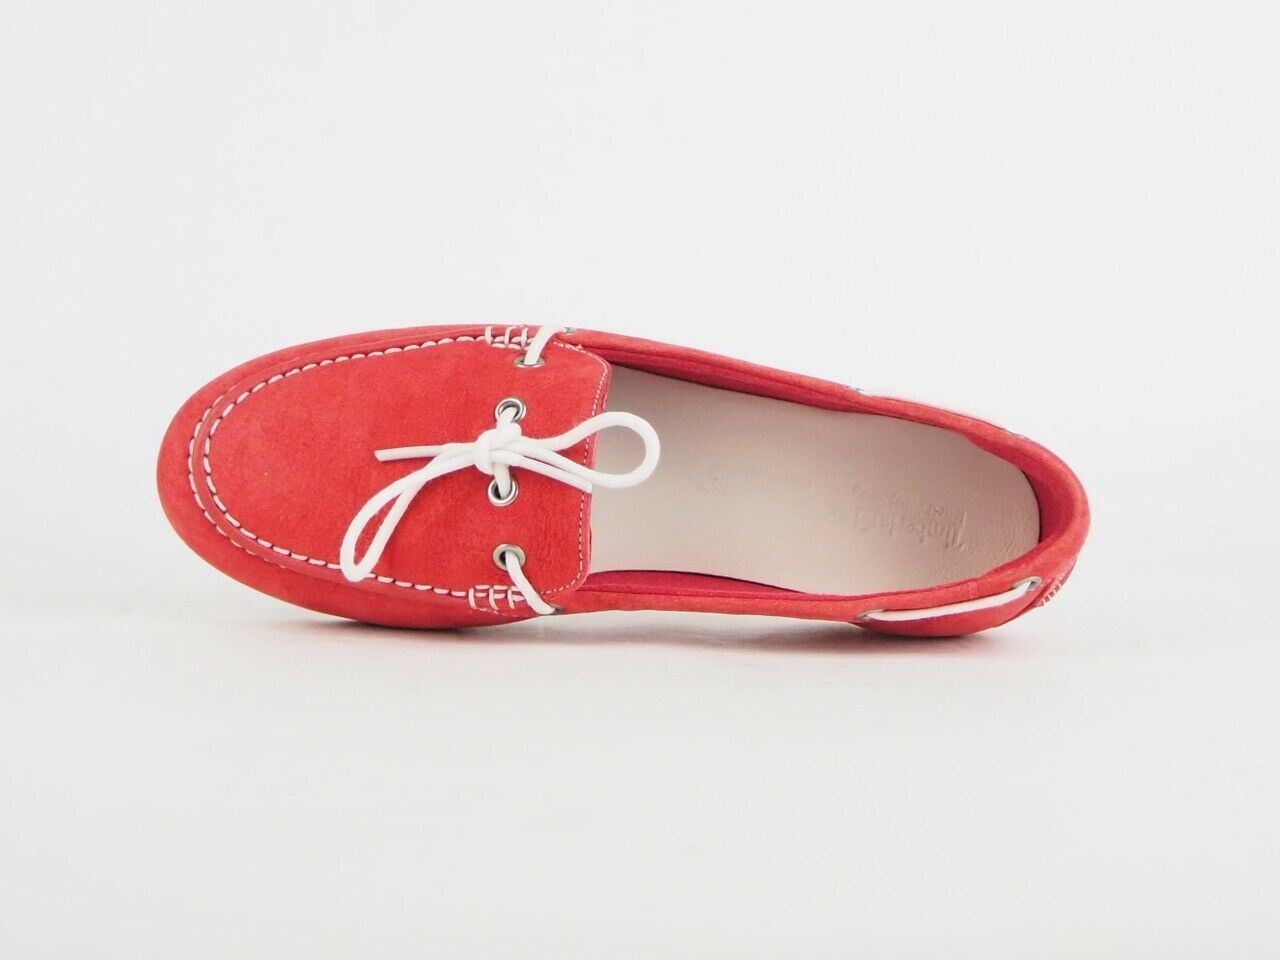 Ladies Timberland Ek Harbrside 1Eye Boat Red 8420B Leather Flat Slips On Shoes - London Top Style